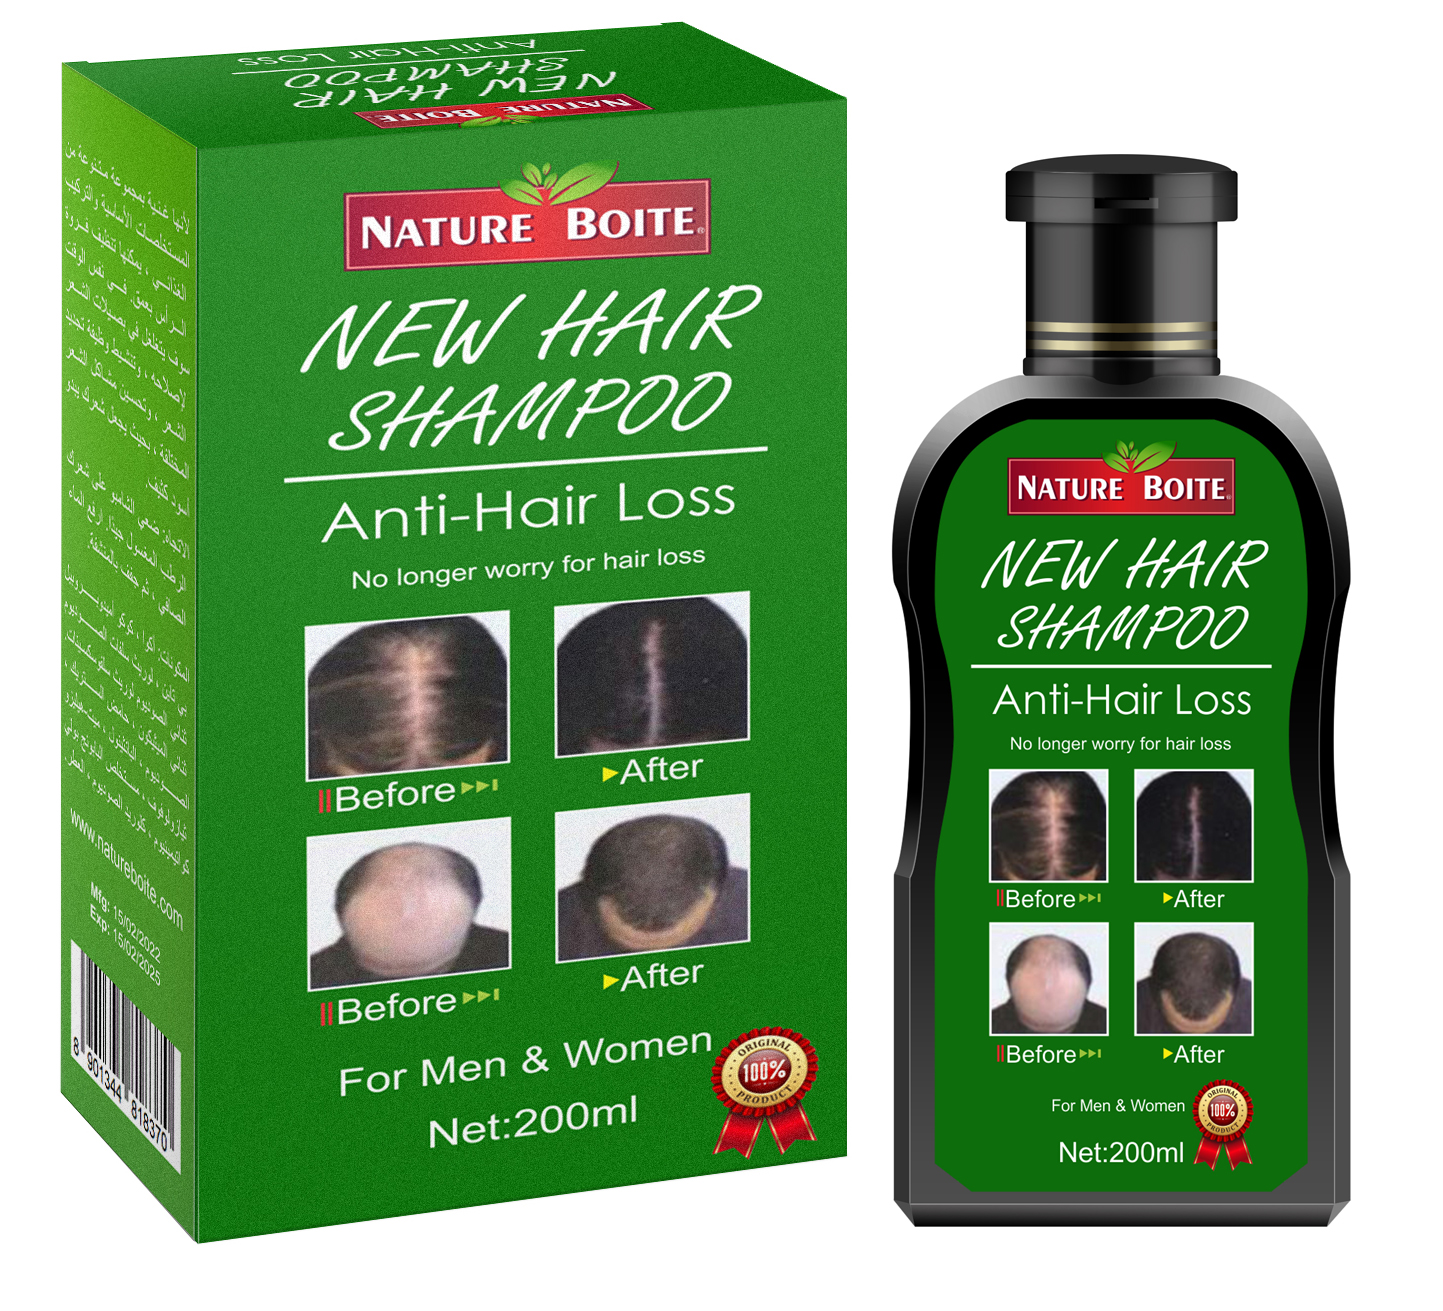 Buy Nature Boite Anti Hair Loss Shampoo 200ml Online in UAE | Sharaf DG